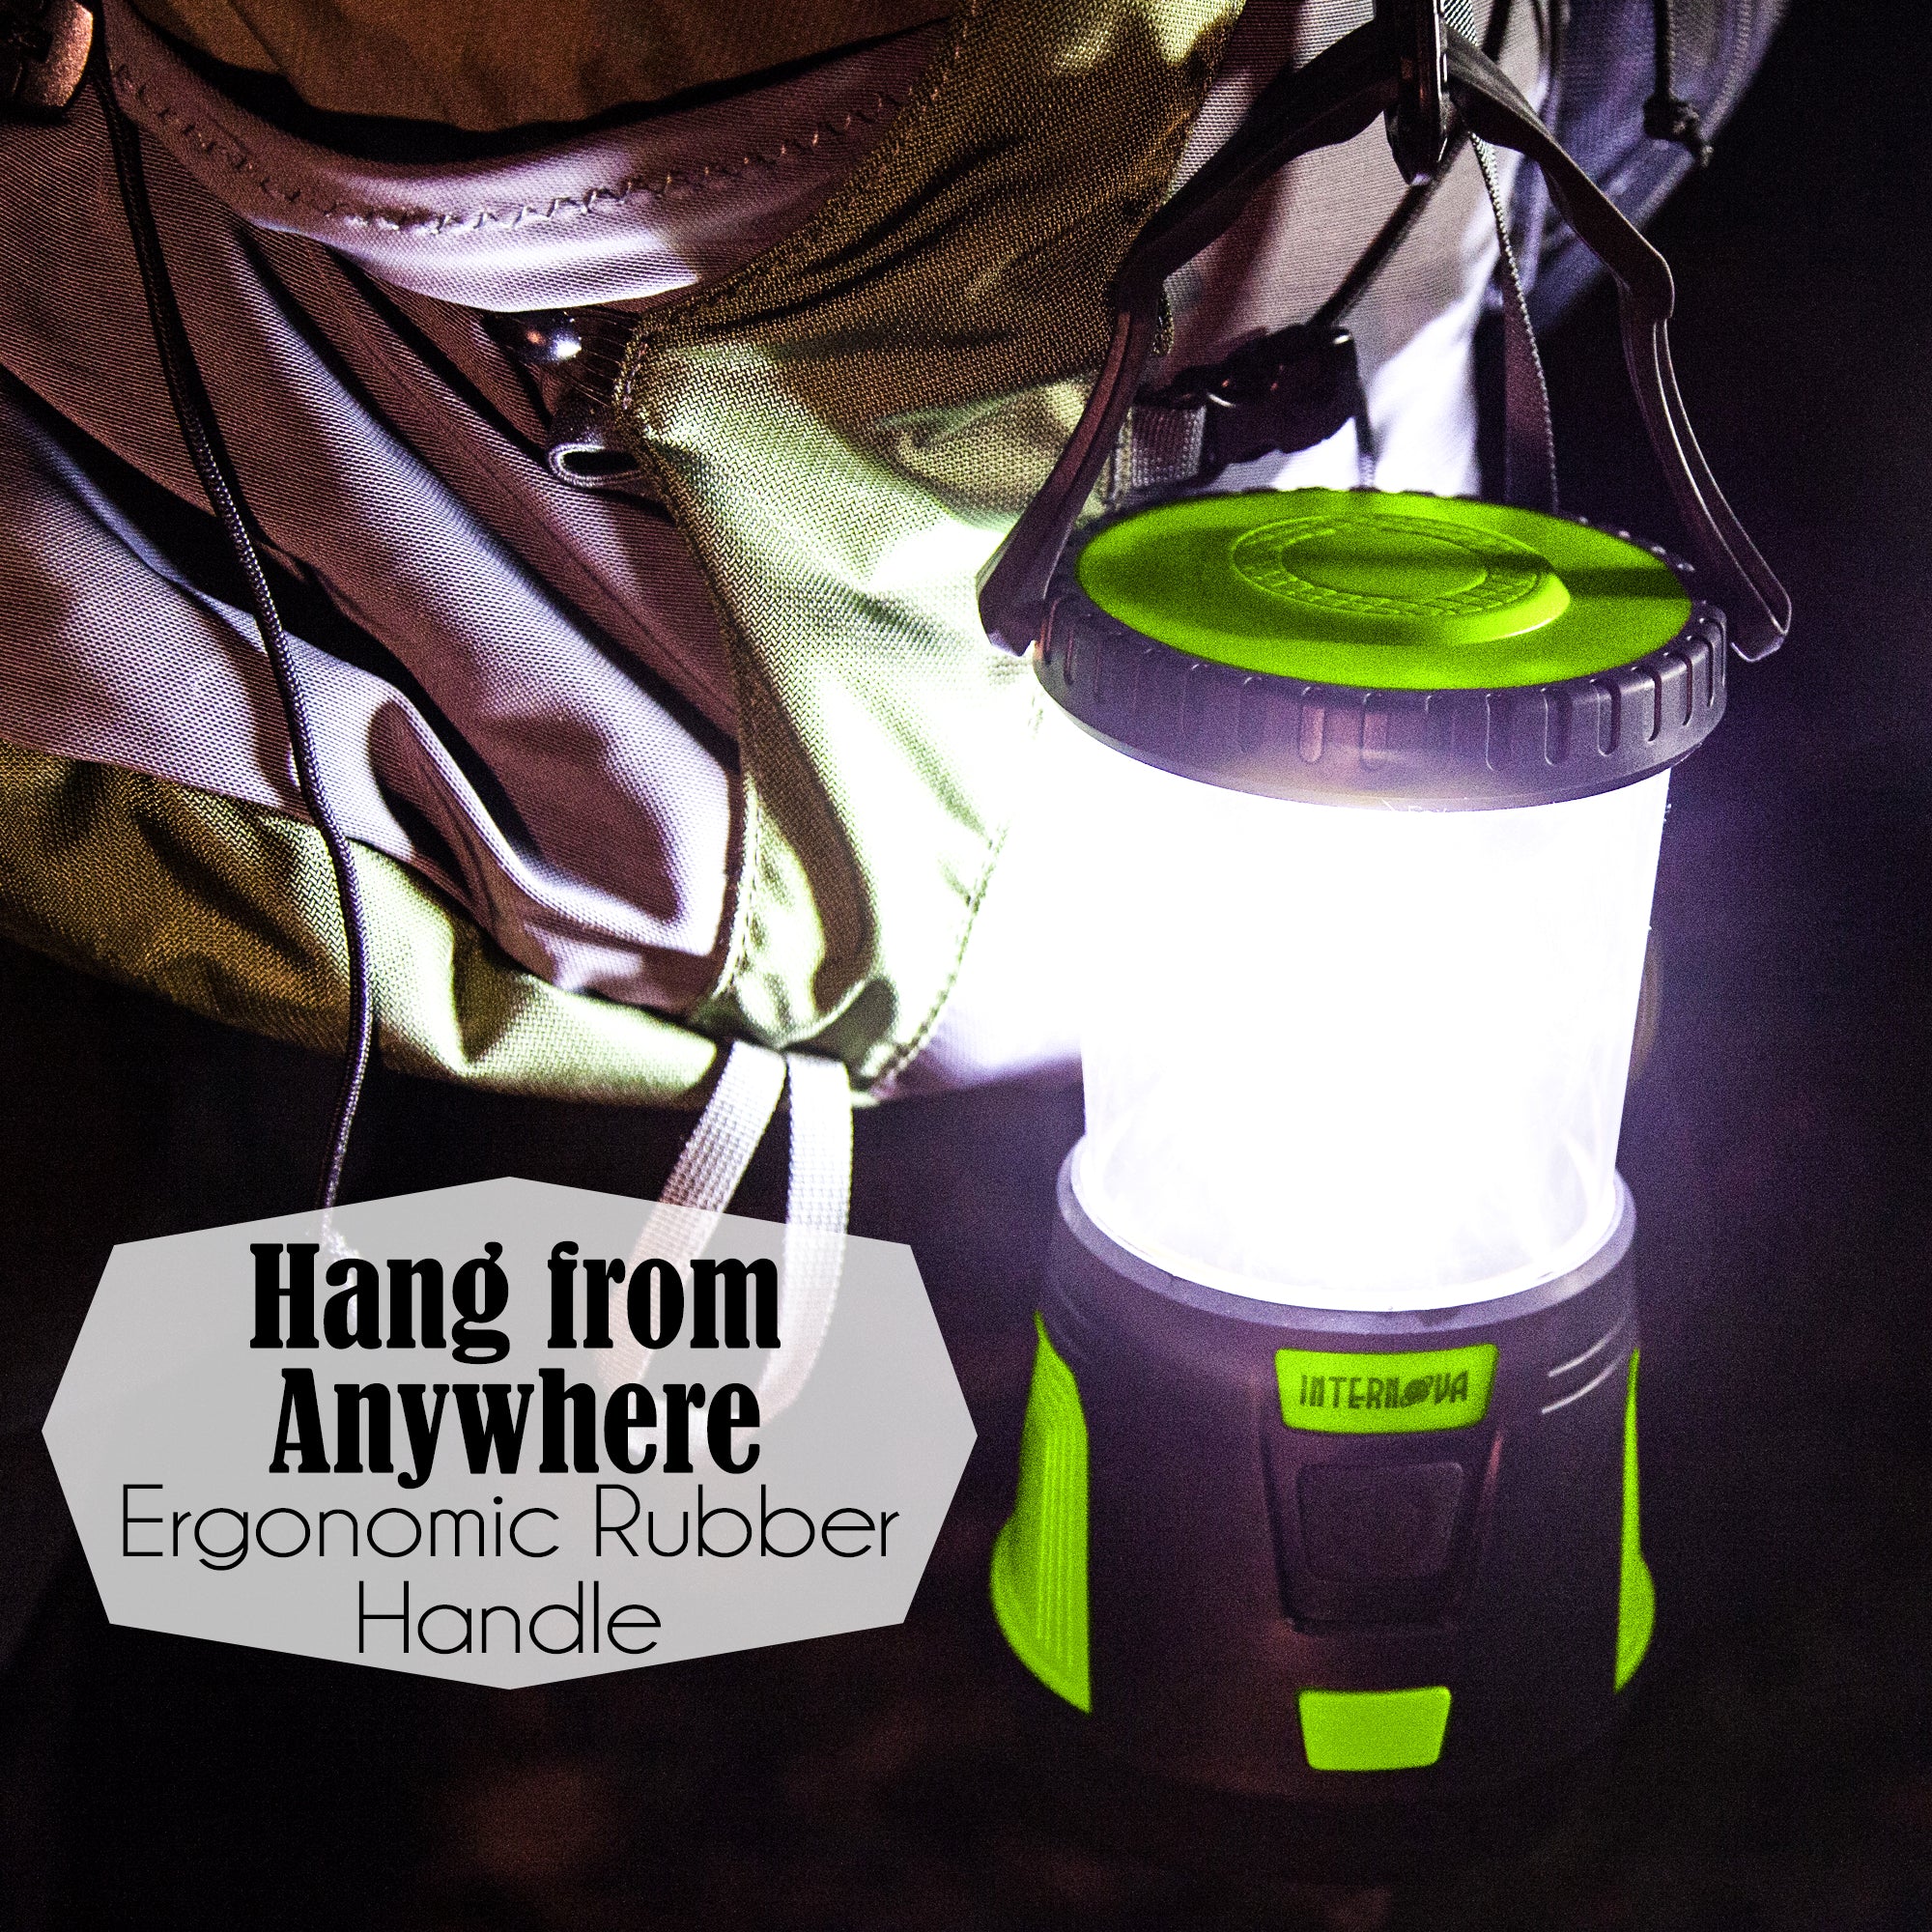 Multiuse Battery Operated Lantern LED Lantern Long-Lasting White Light  Camping Lantern